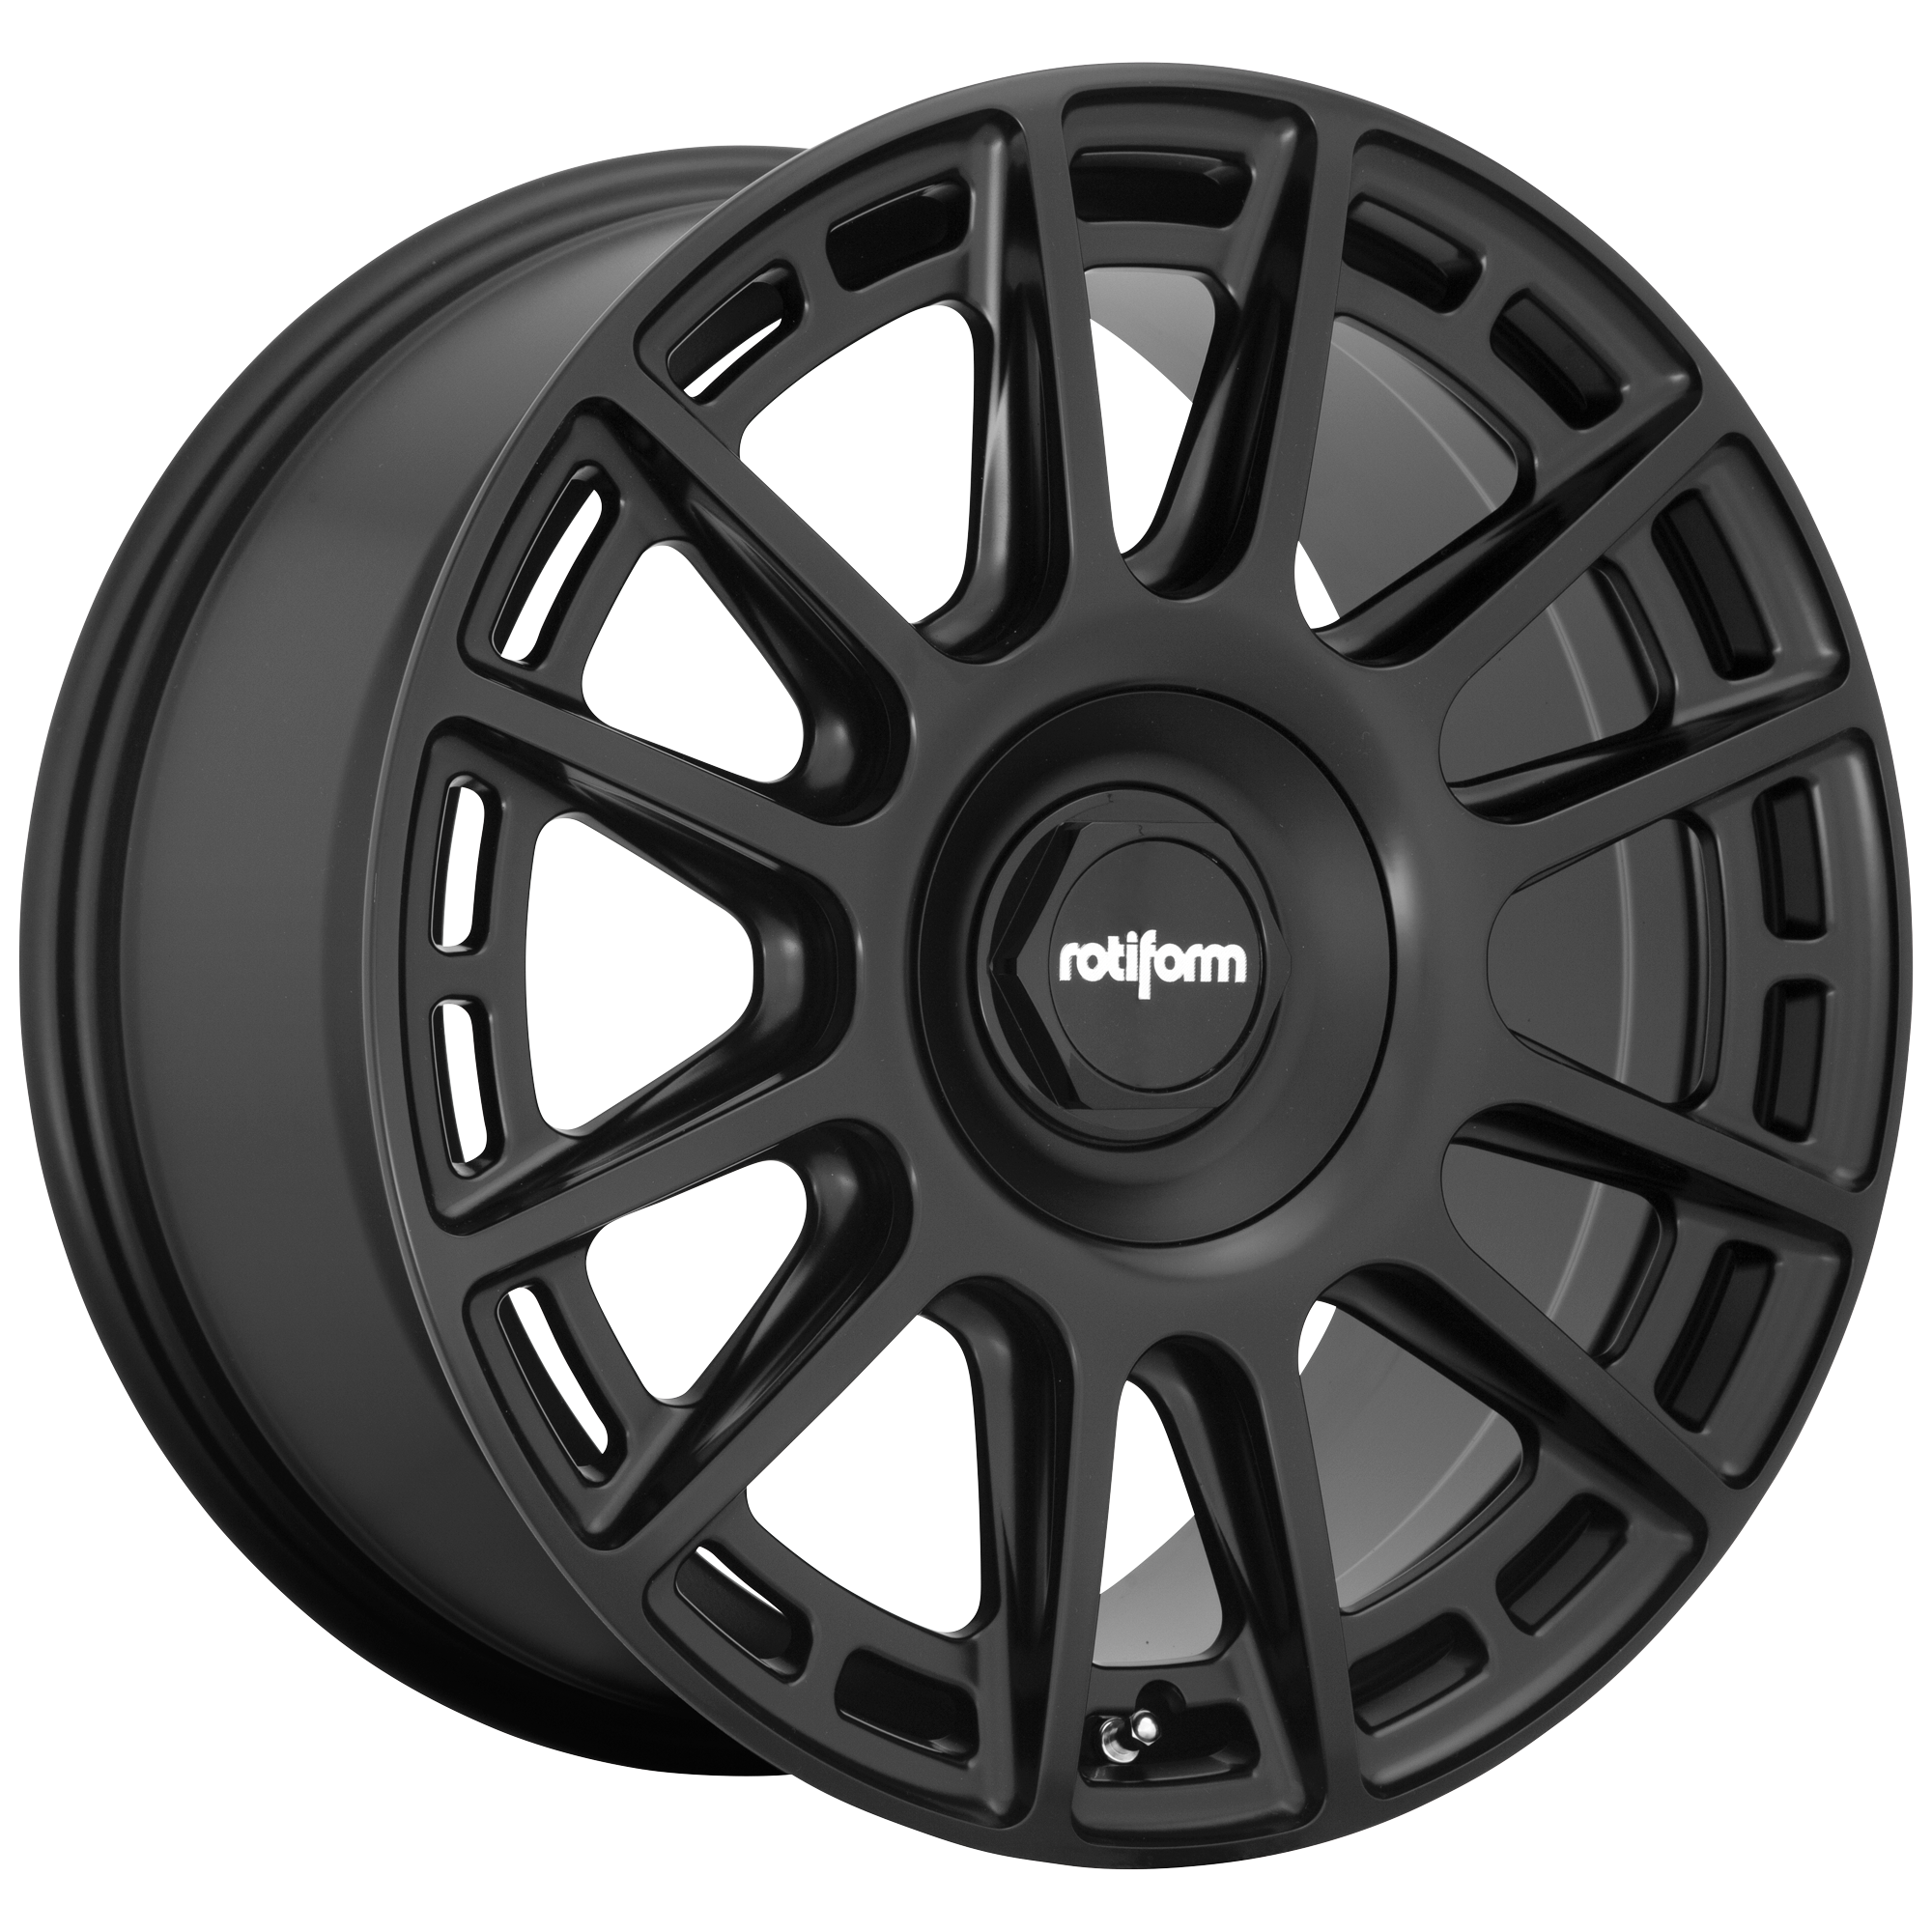 OZR 19x8.5 5x108.00/5x120.00 MATTE BLACK (45 mm) - Tires and Engine Performance